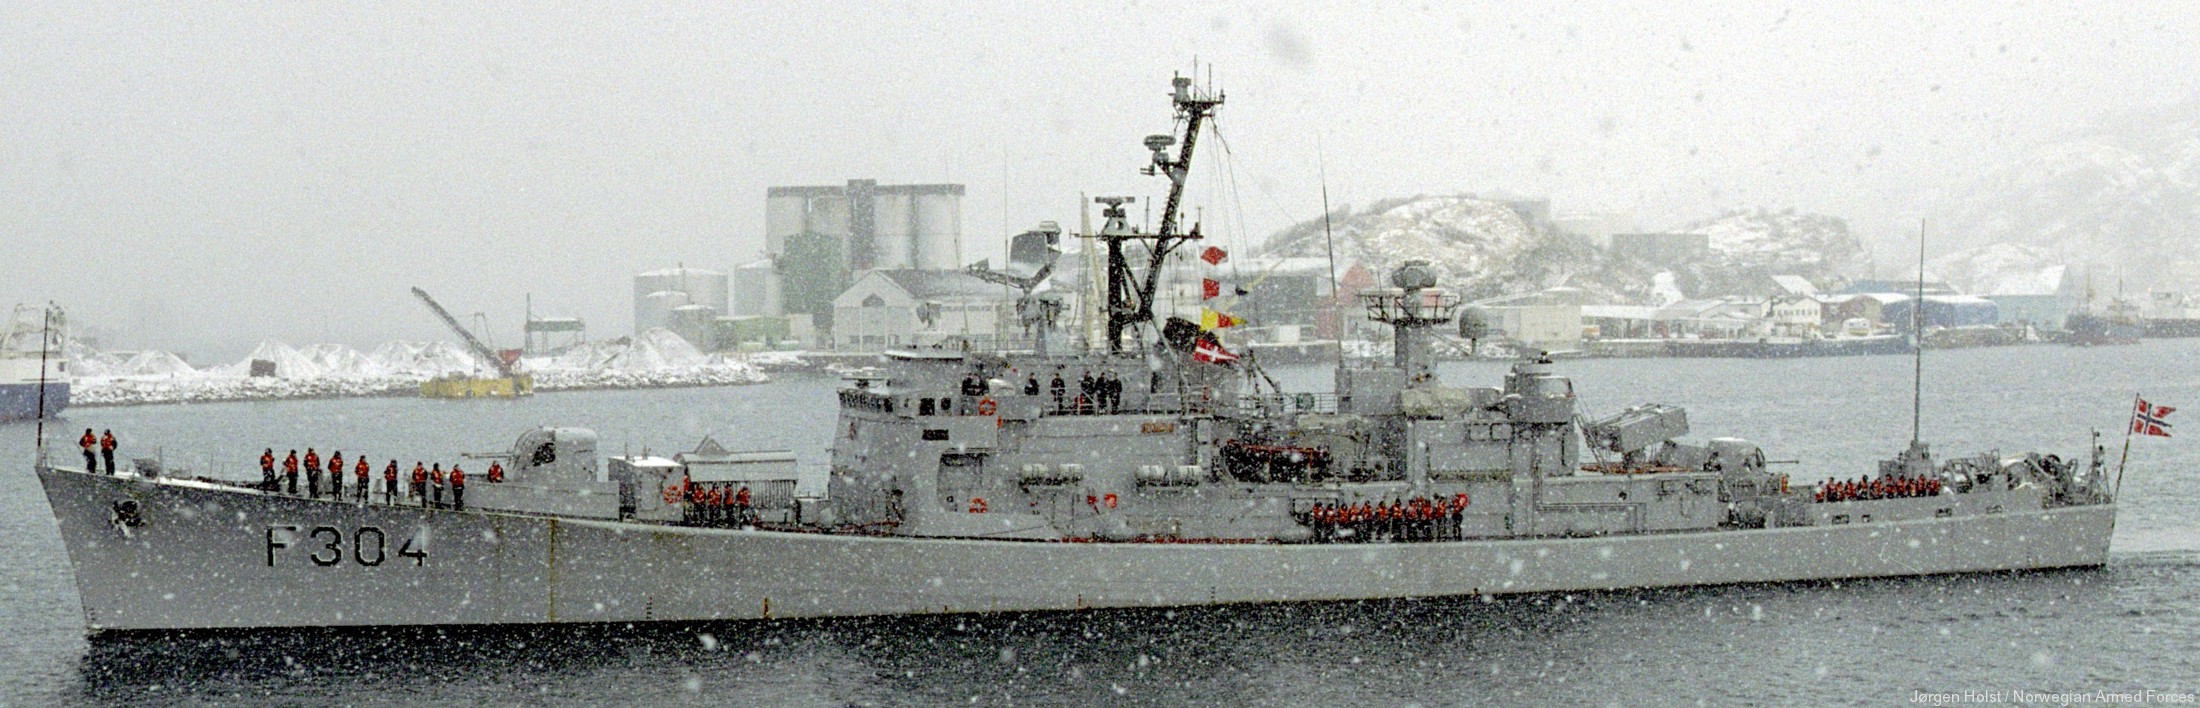 f-304 hnoms narvik knm oslo class frigate royal norwegian navy sjoforsvaret 22